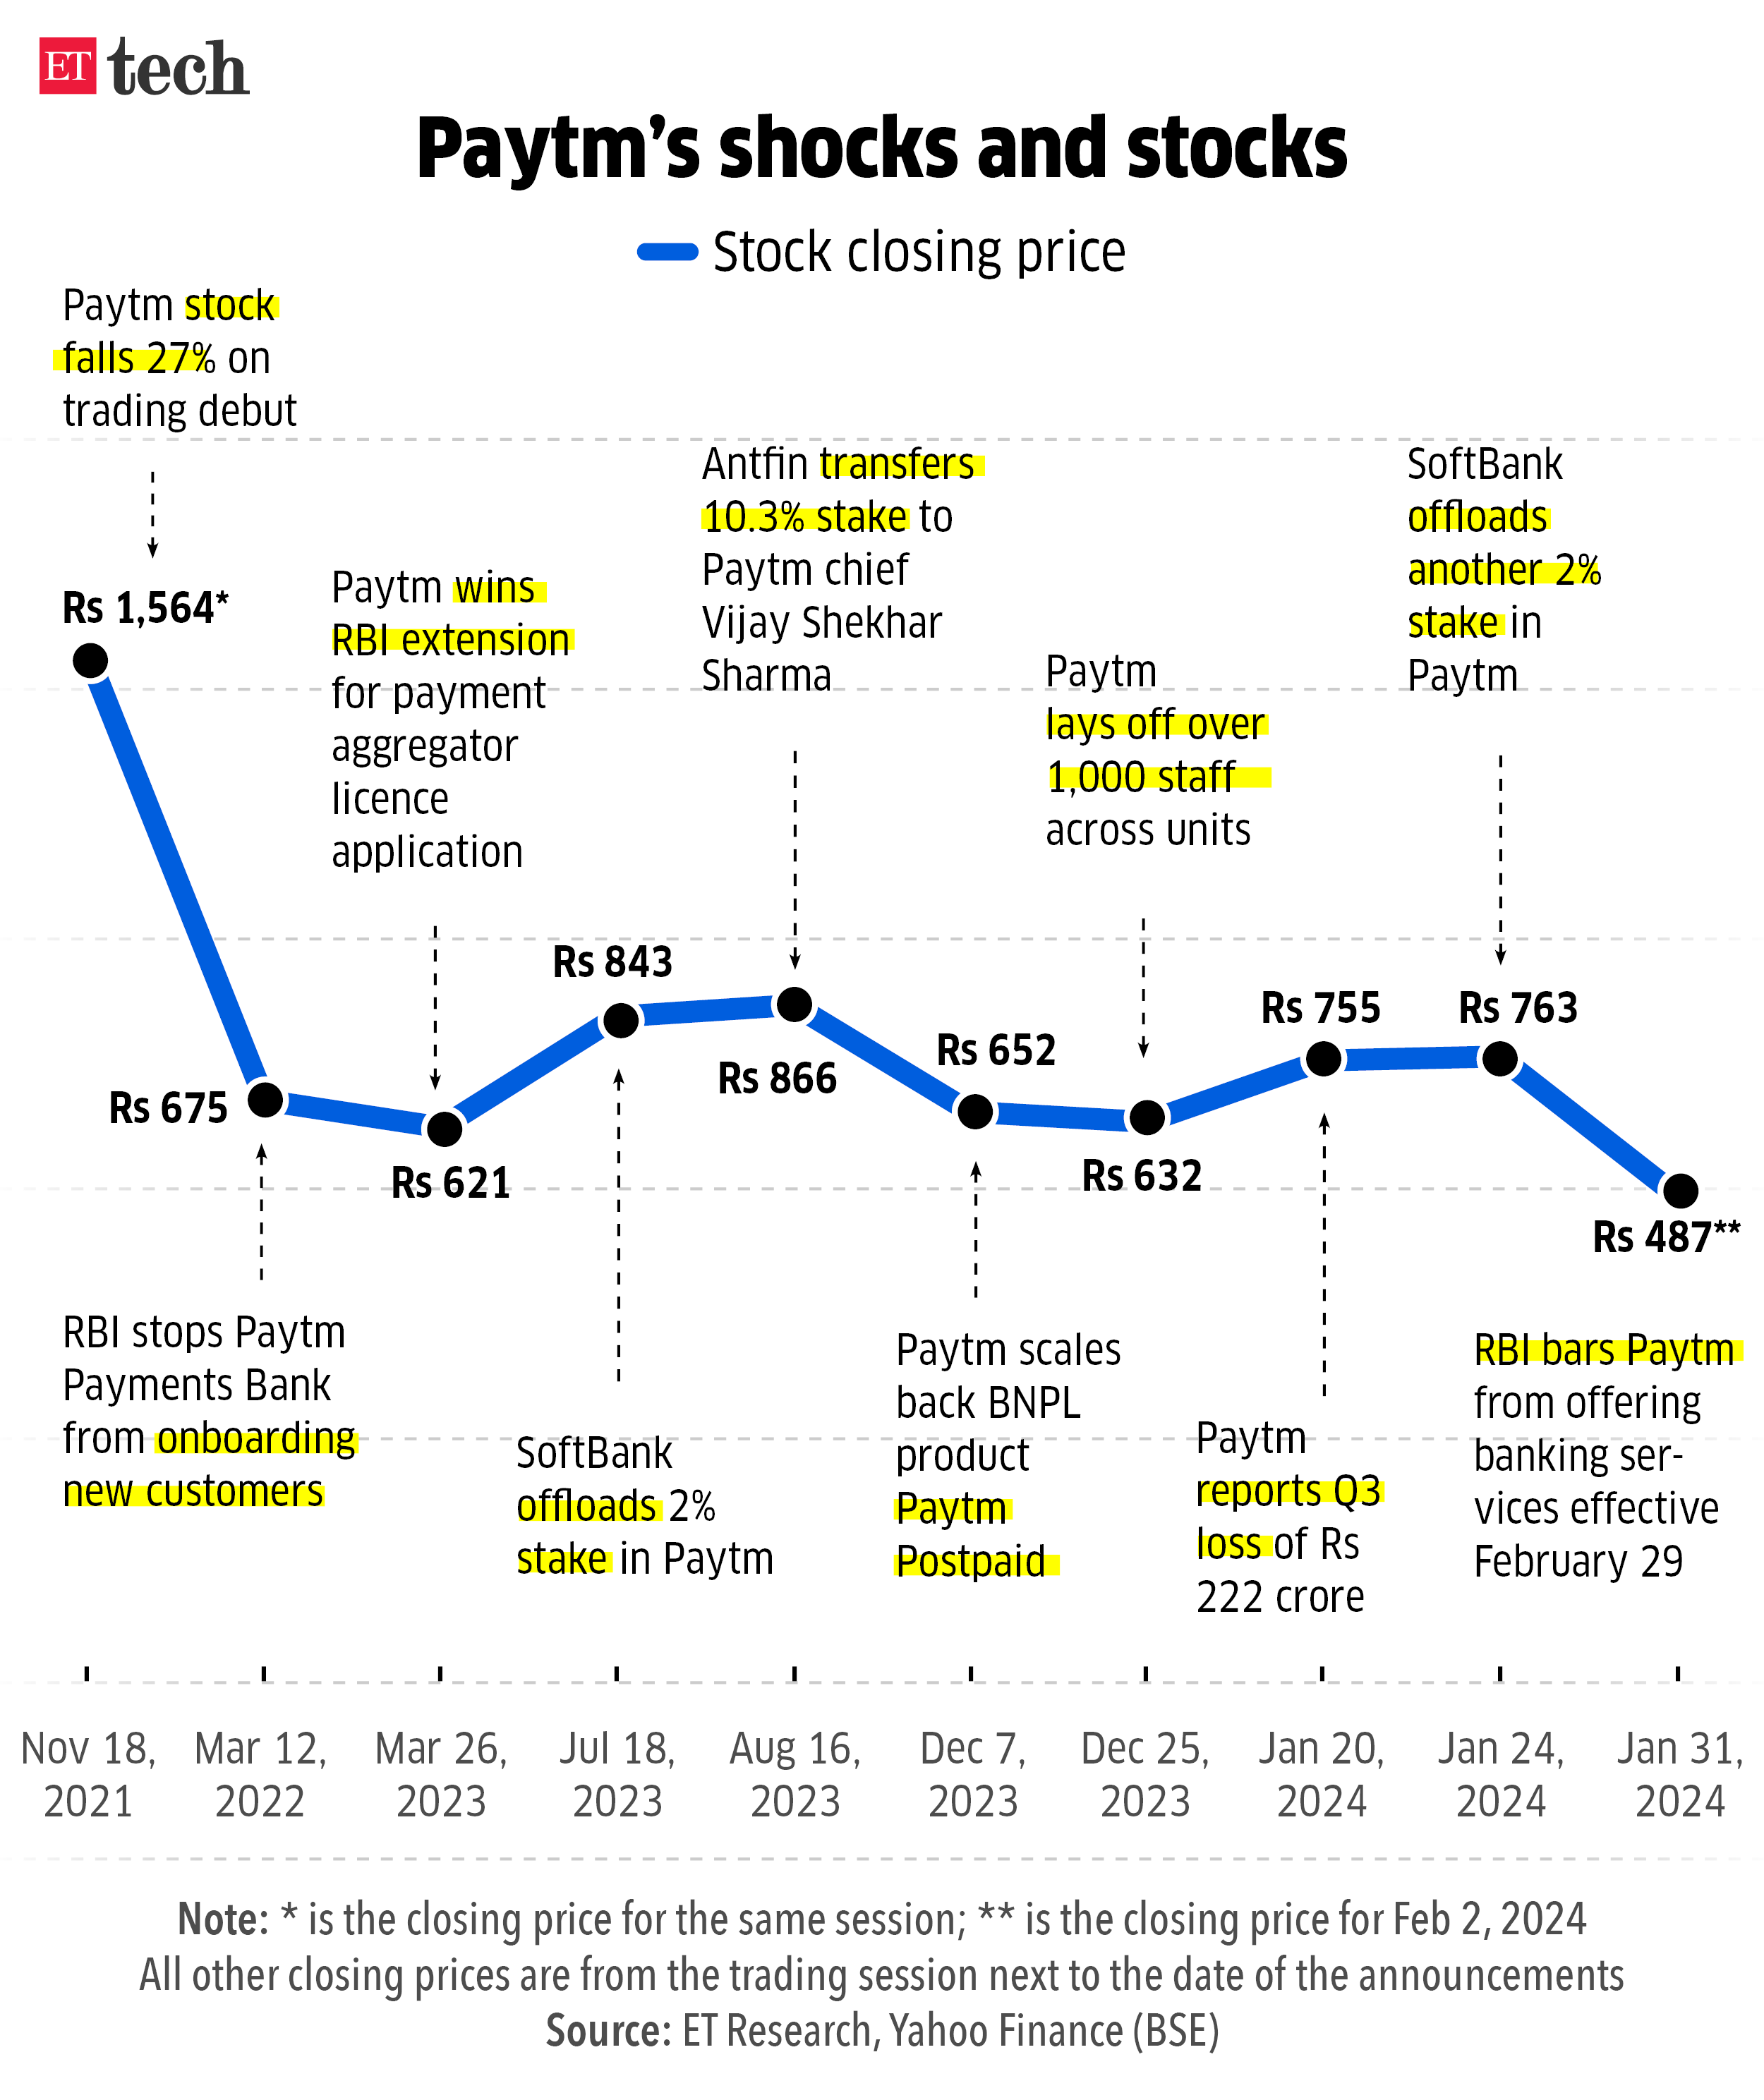 Paytm shocks and stocks_Feb 2024_Graphic_ETTECH